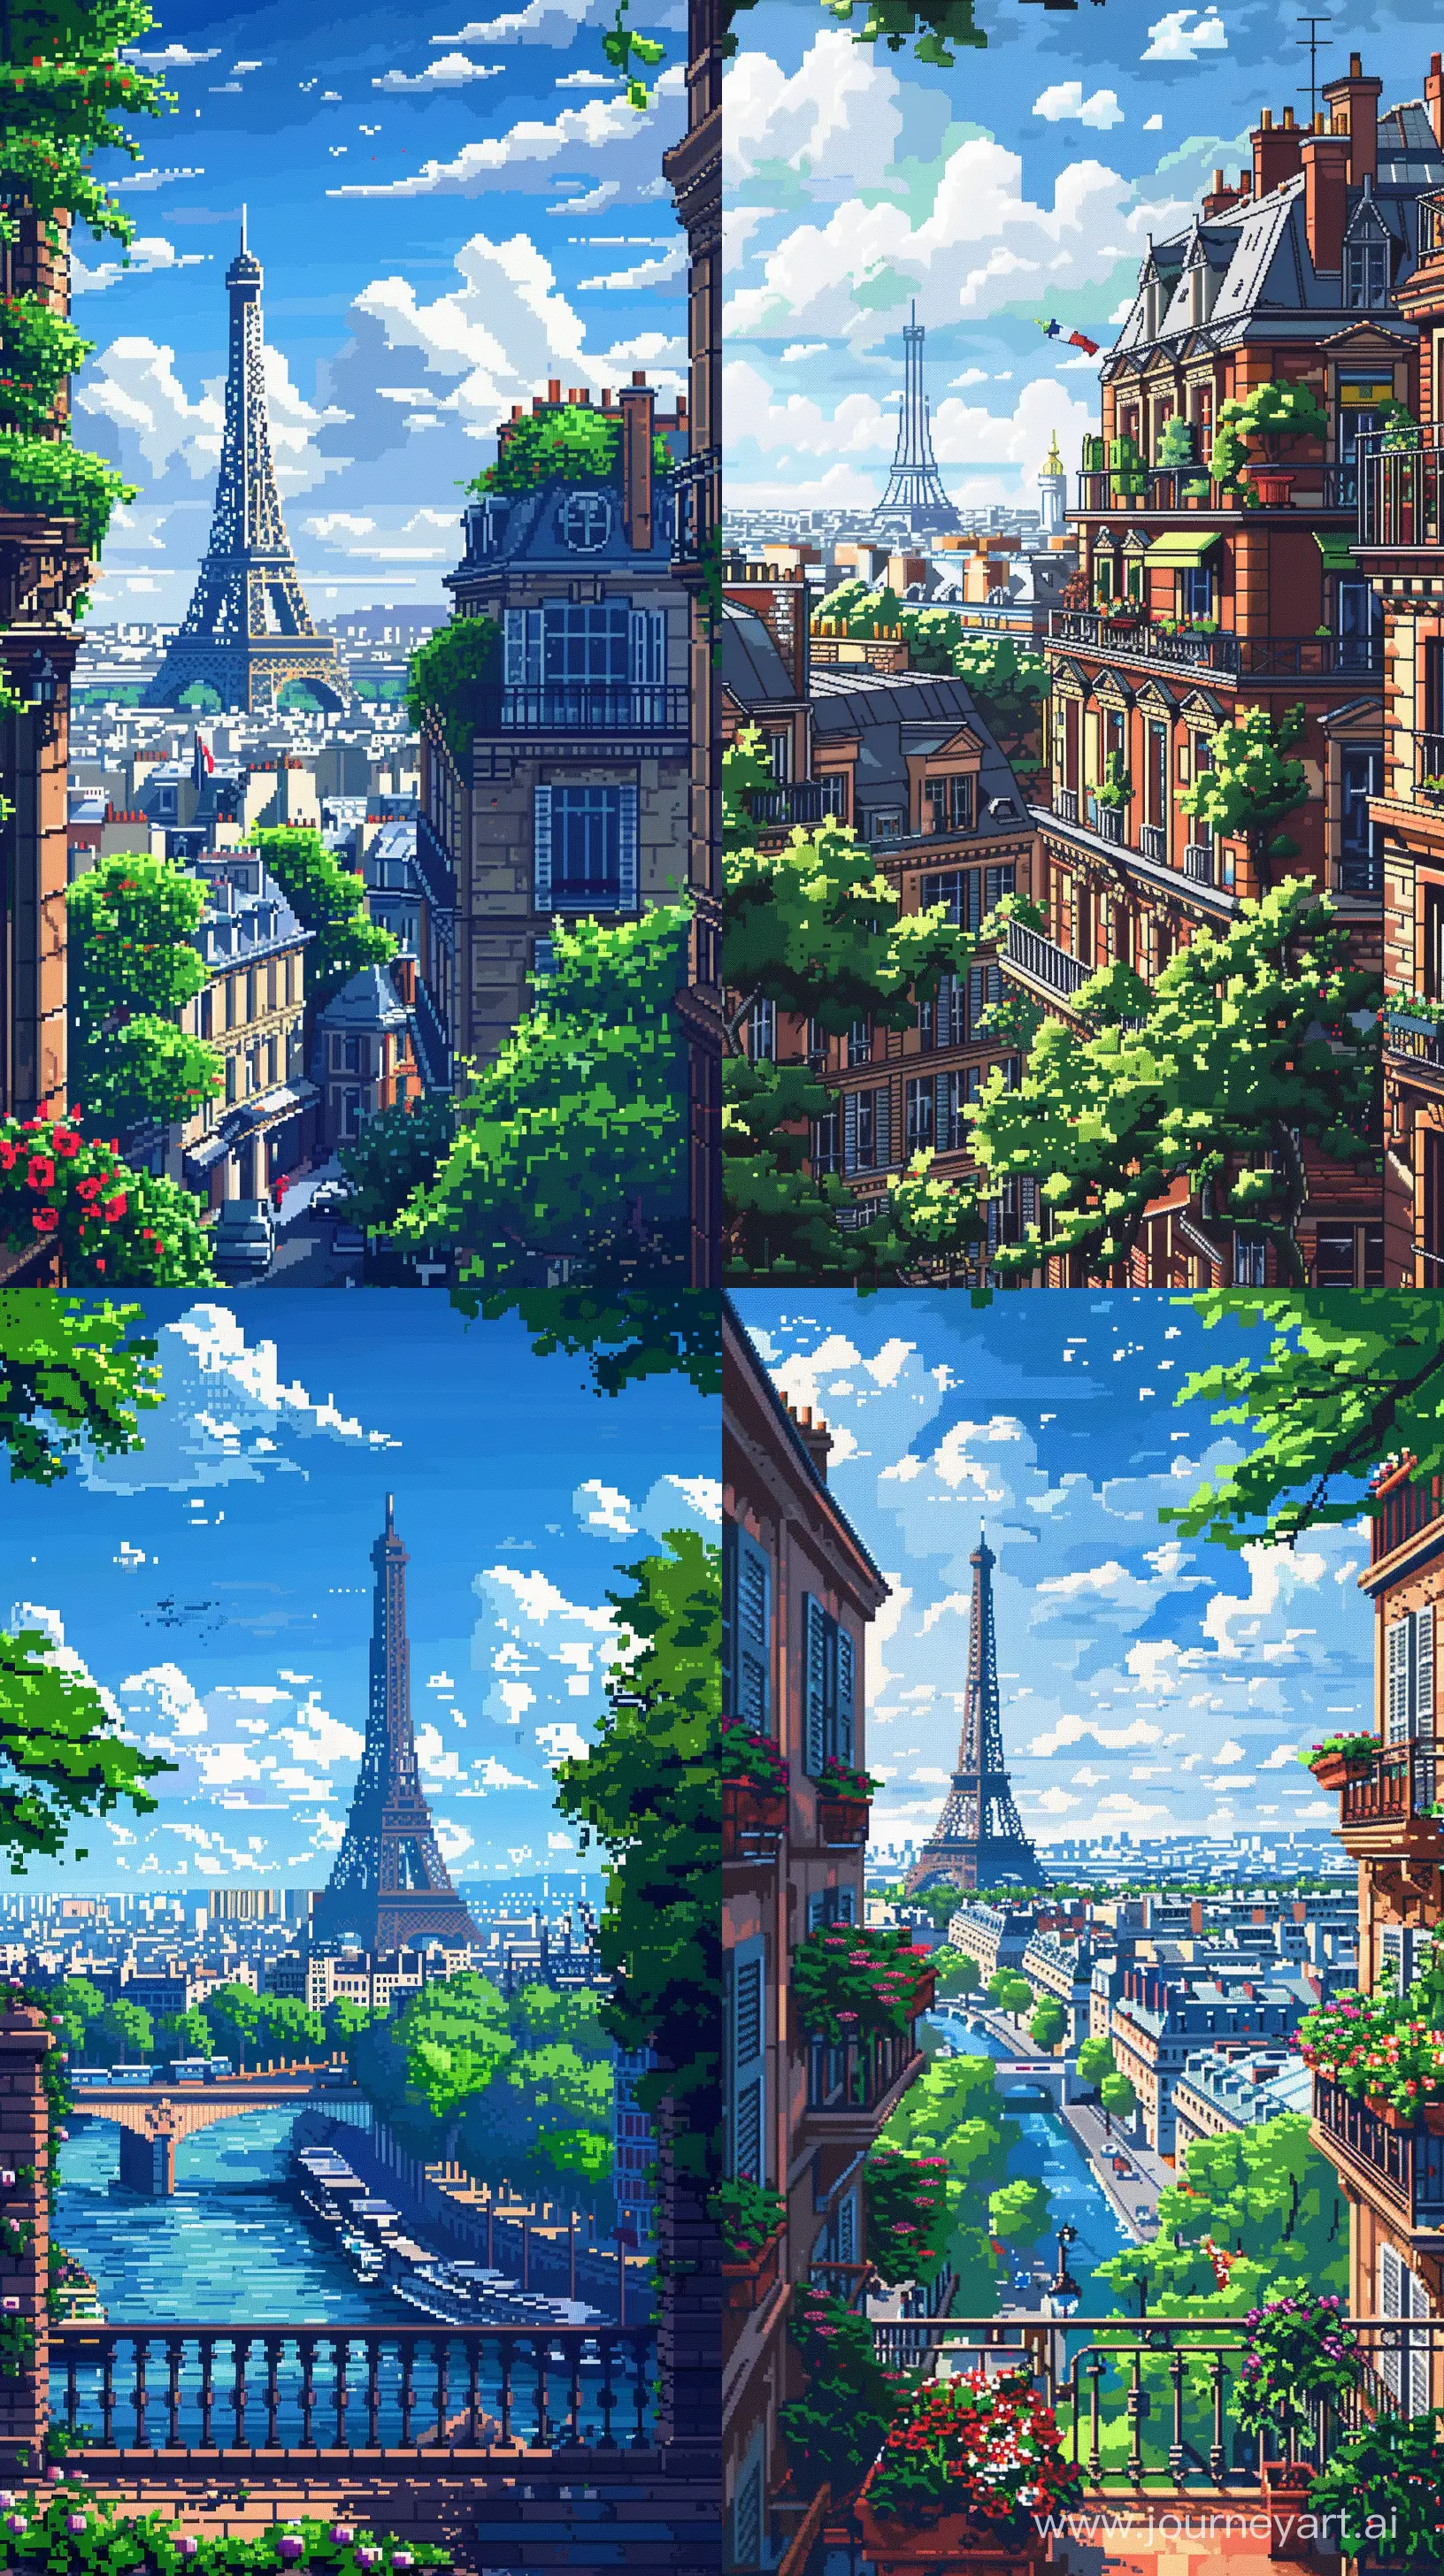 Paris-Cityscape-Pixel-Art-Retro-Daytime-Scene-with-Detailed-8bit-Style